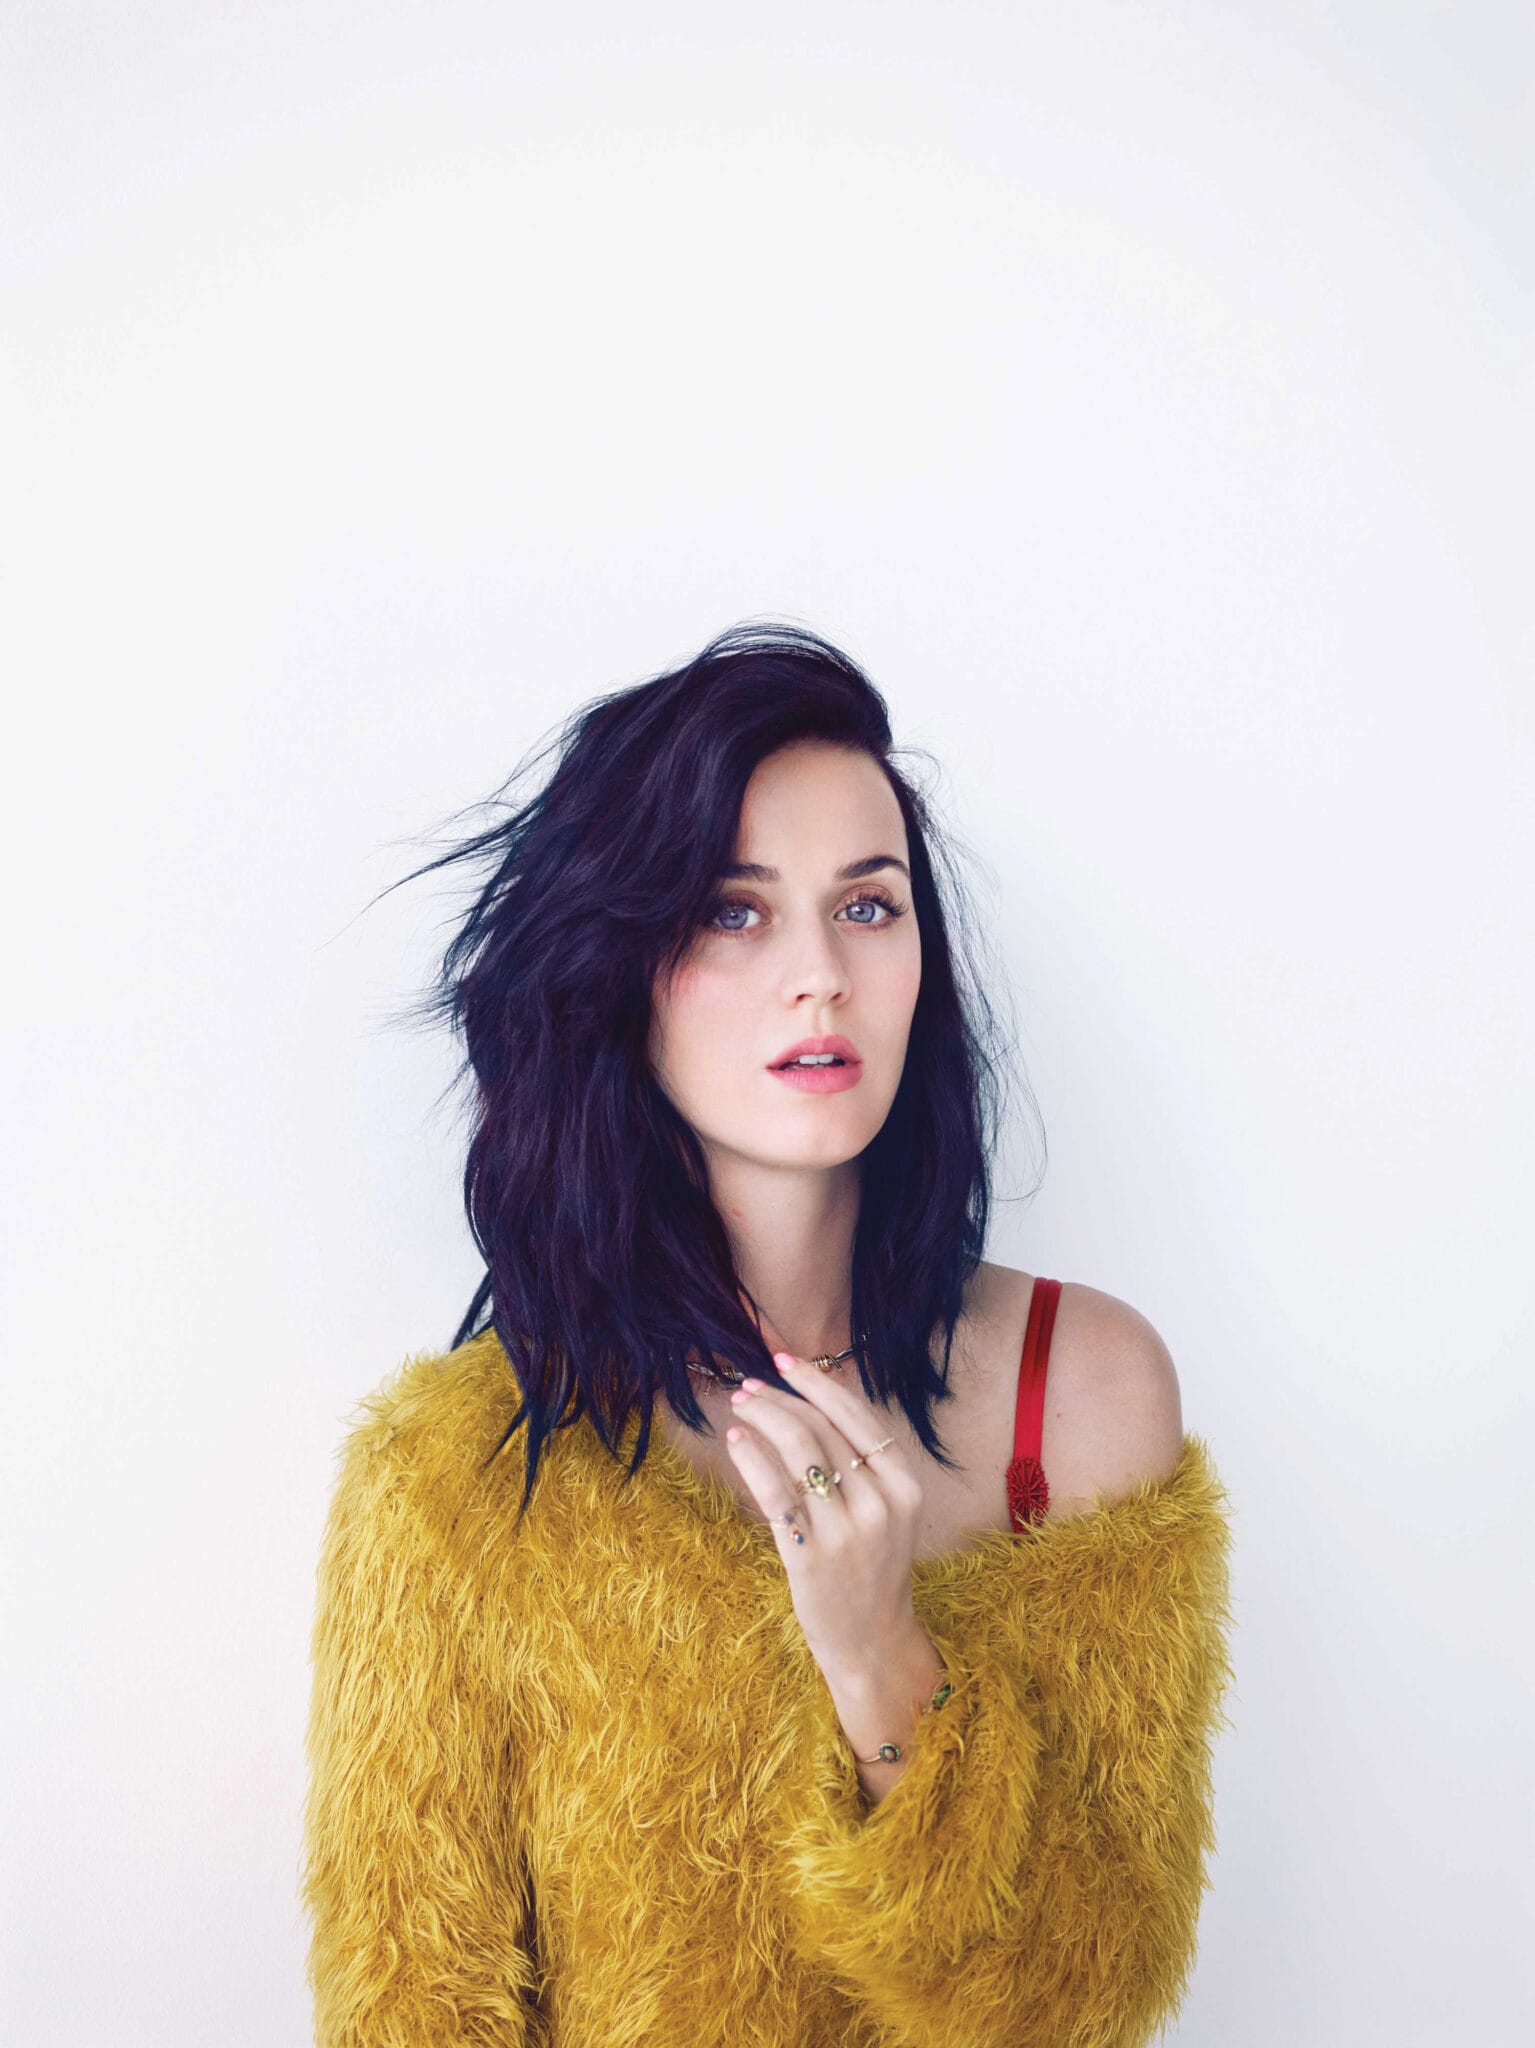 Katy Perry. Credit: Cass Bird